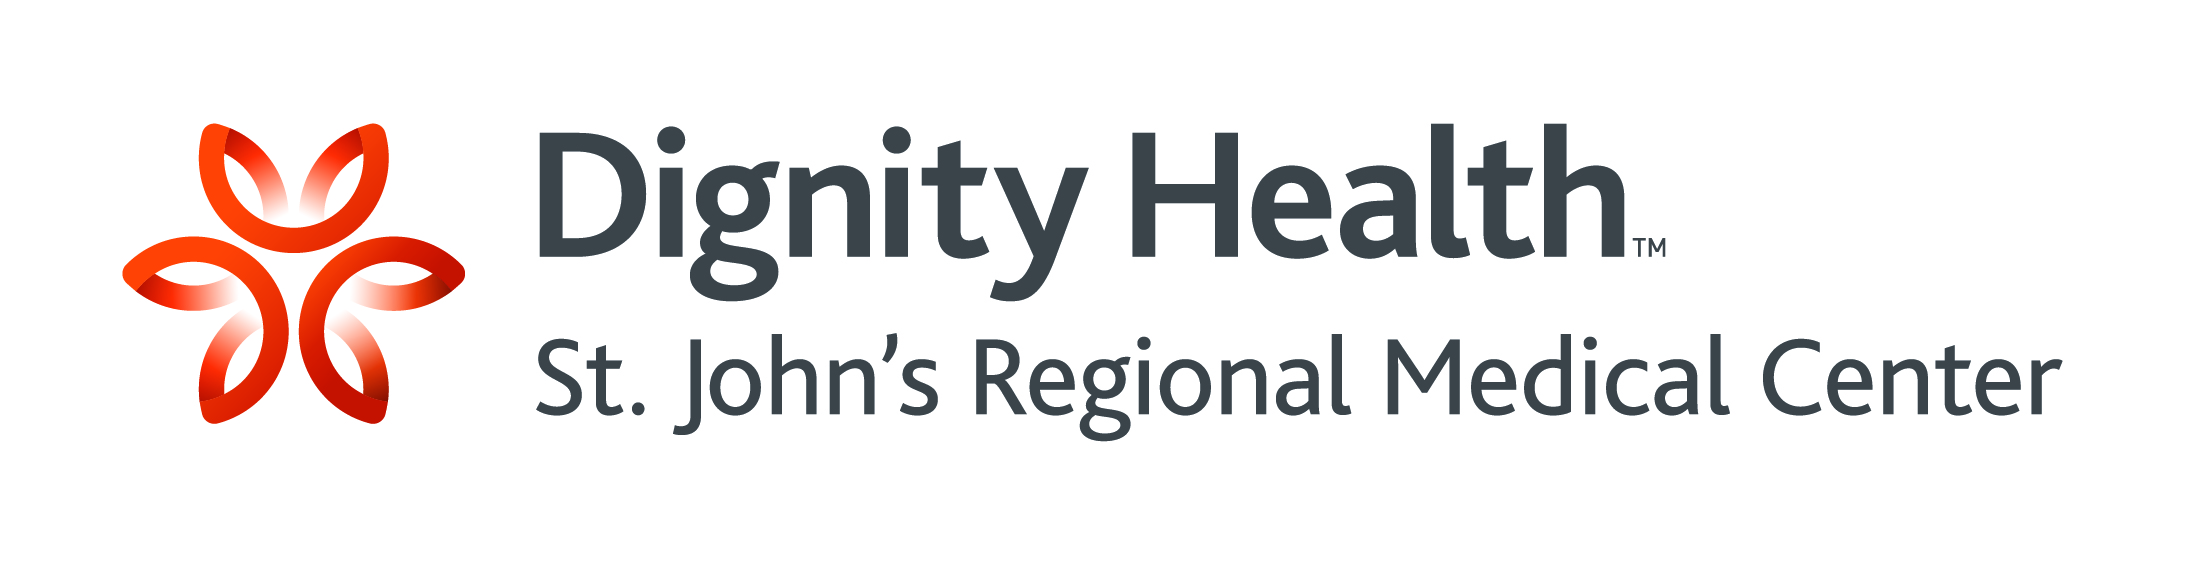 Dignity Health - St. John's Regional Medical Center